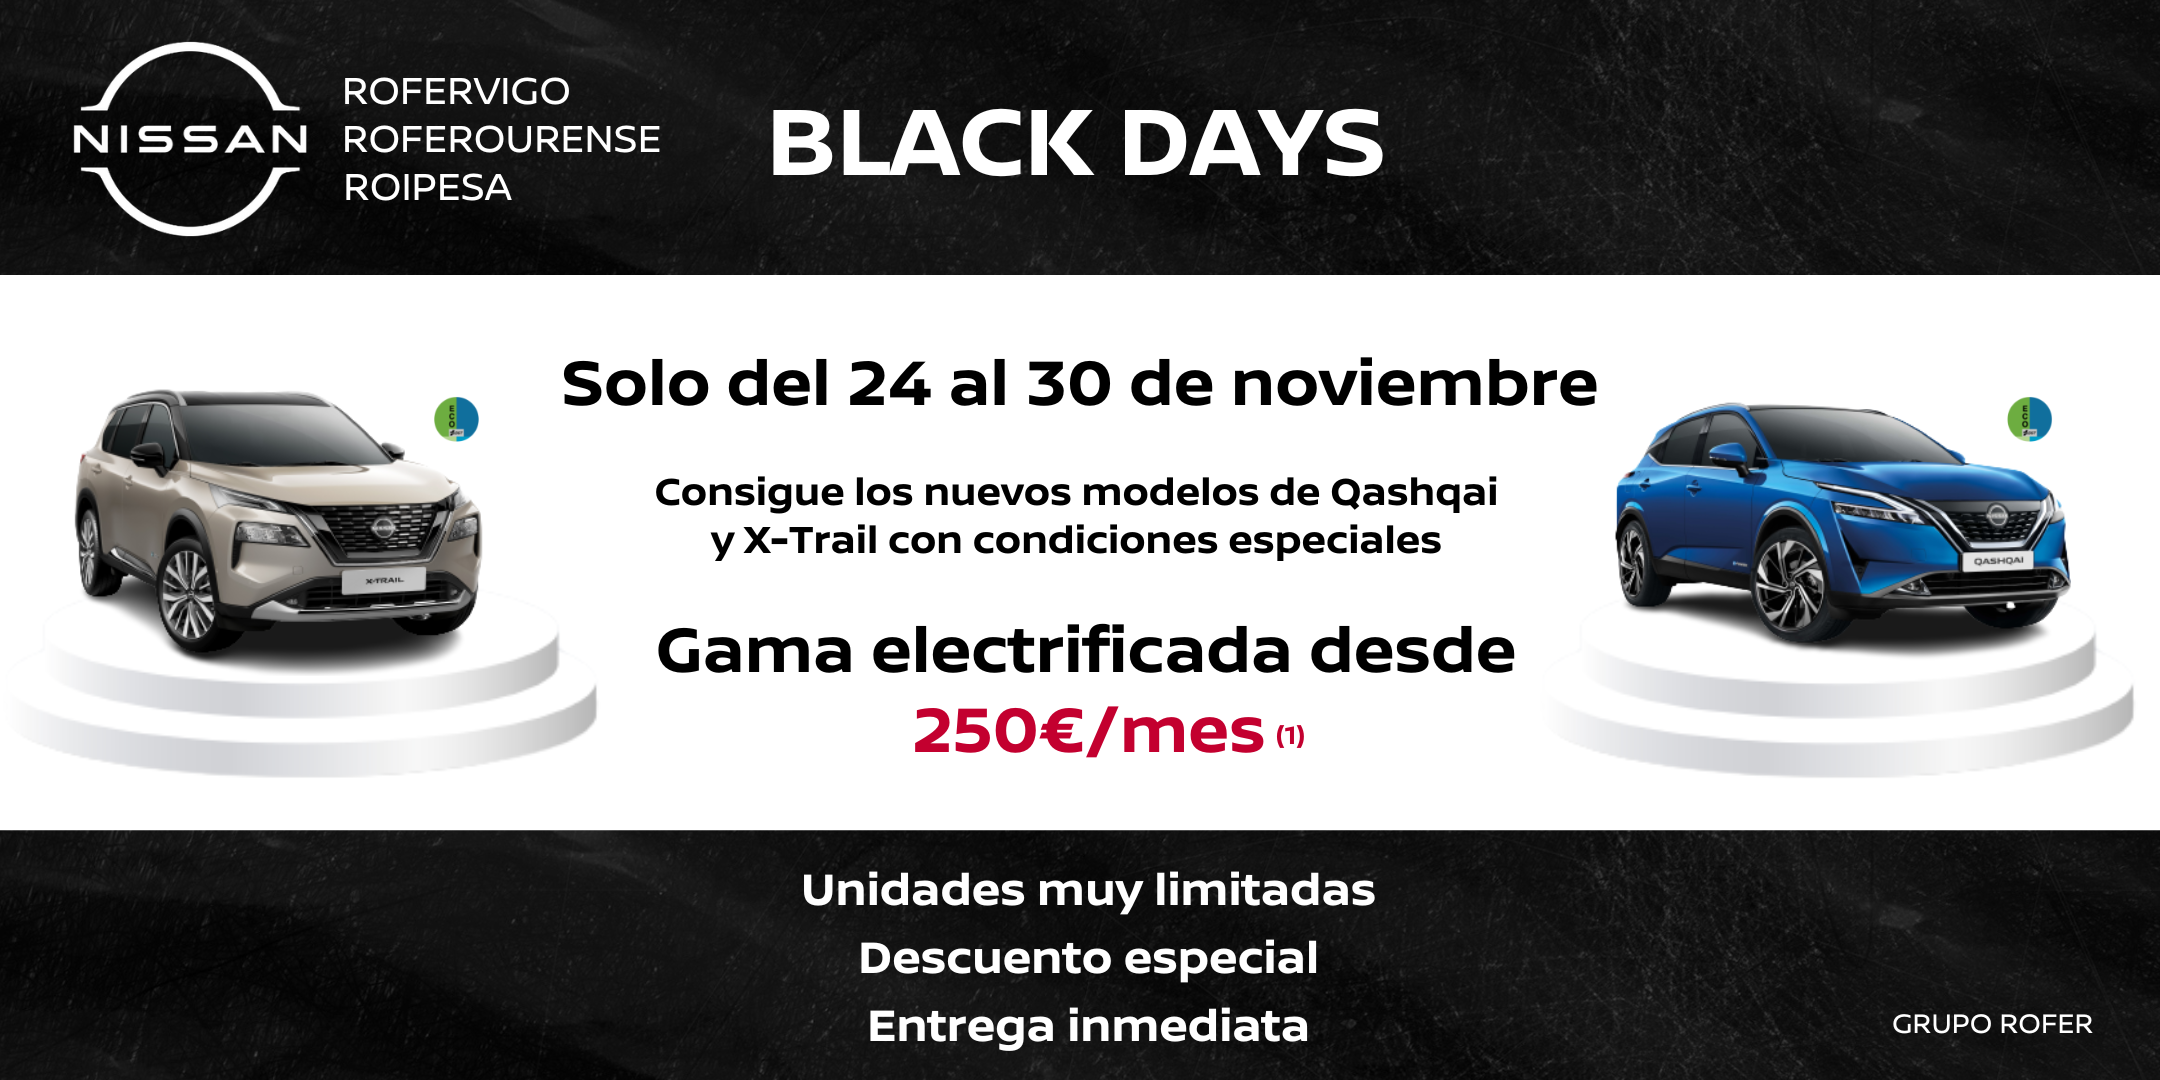 Black Days